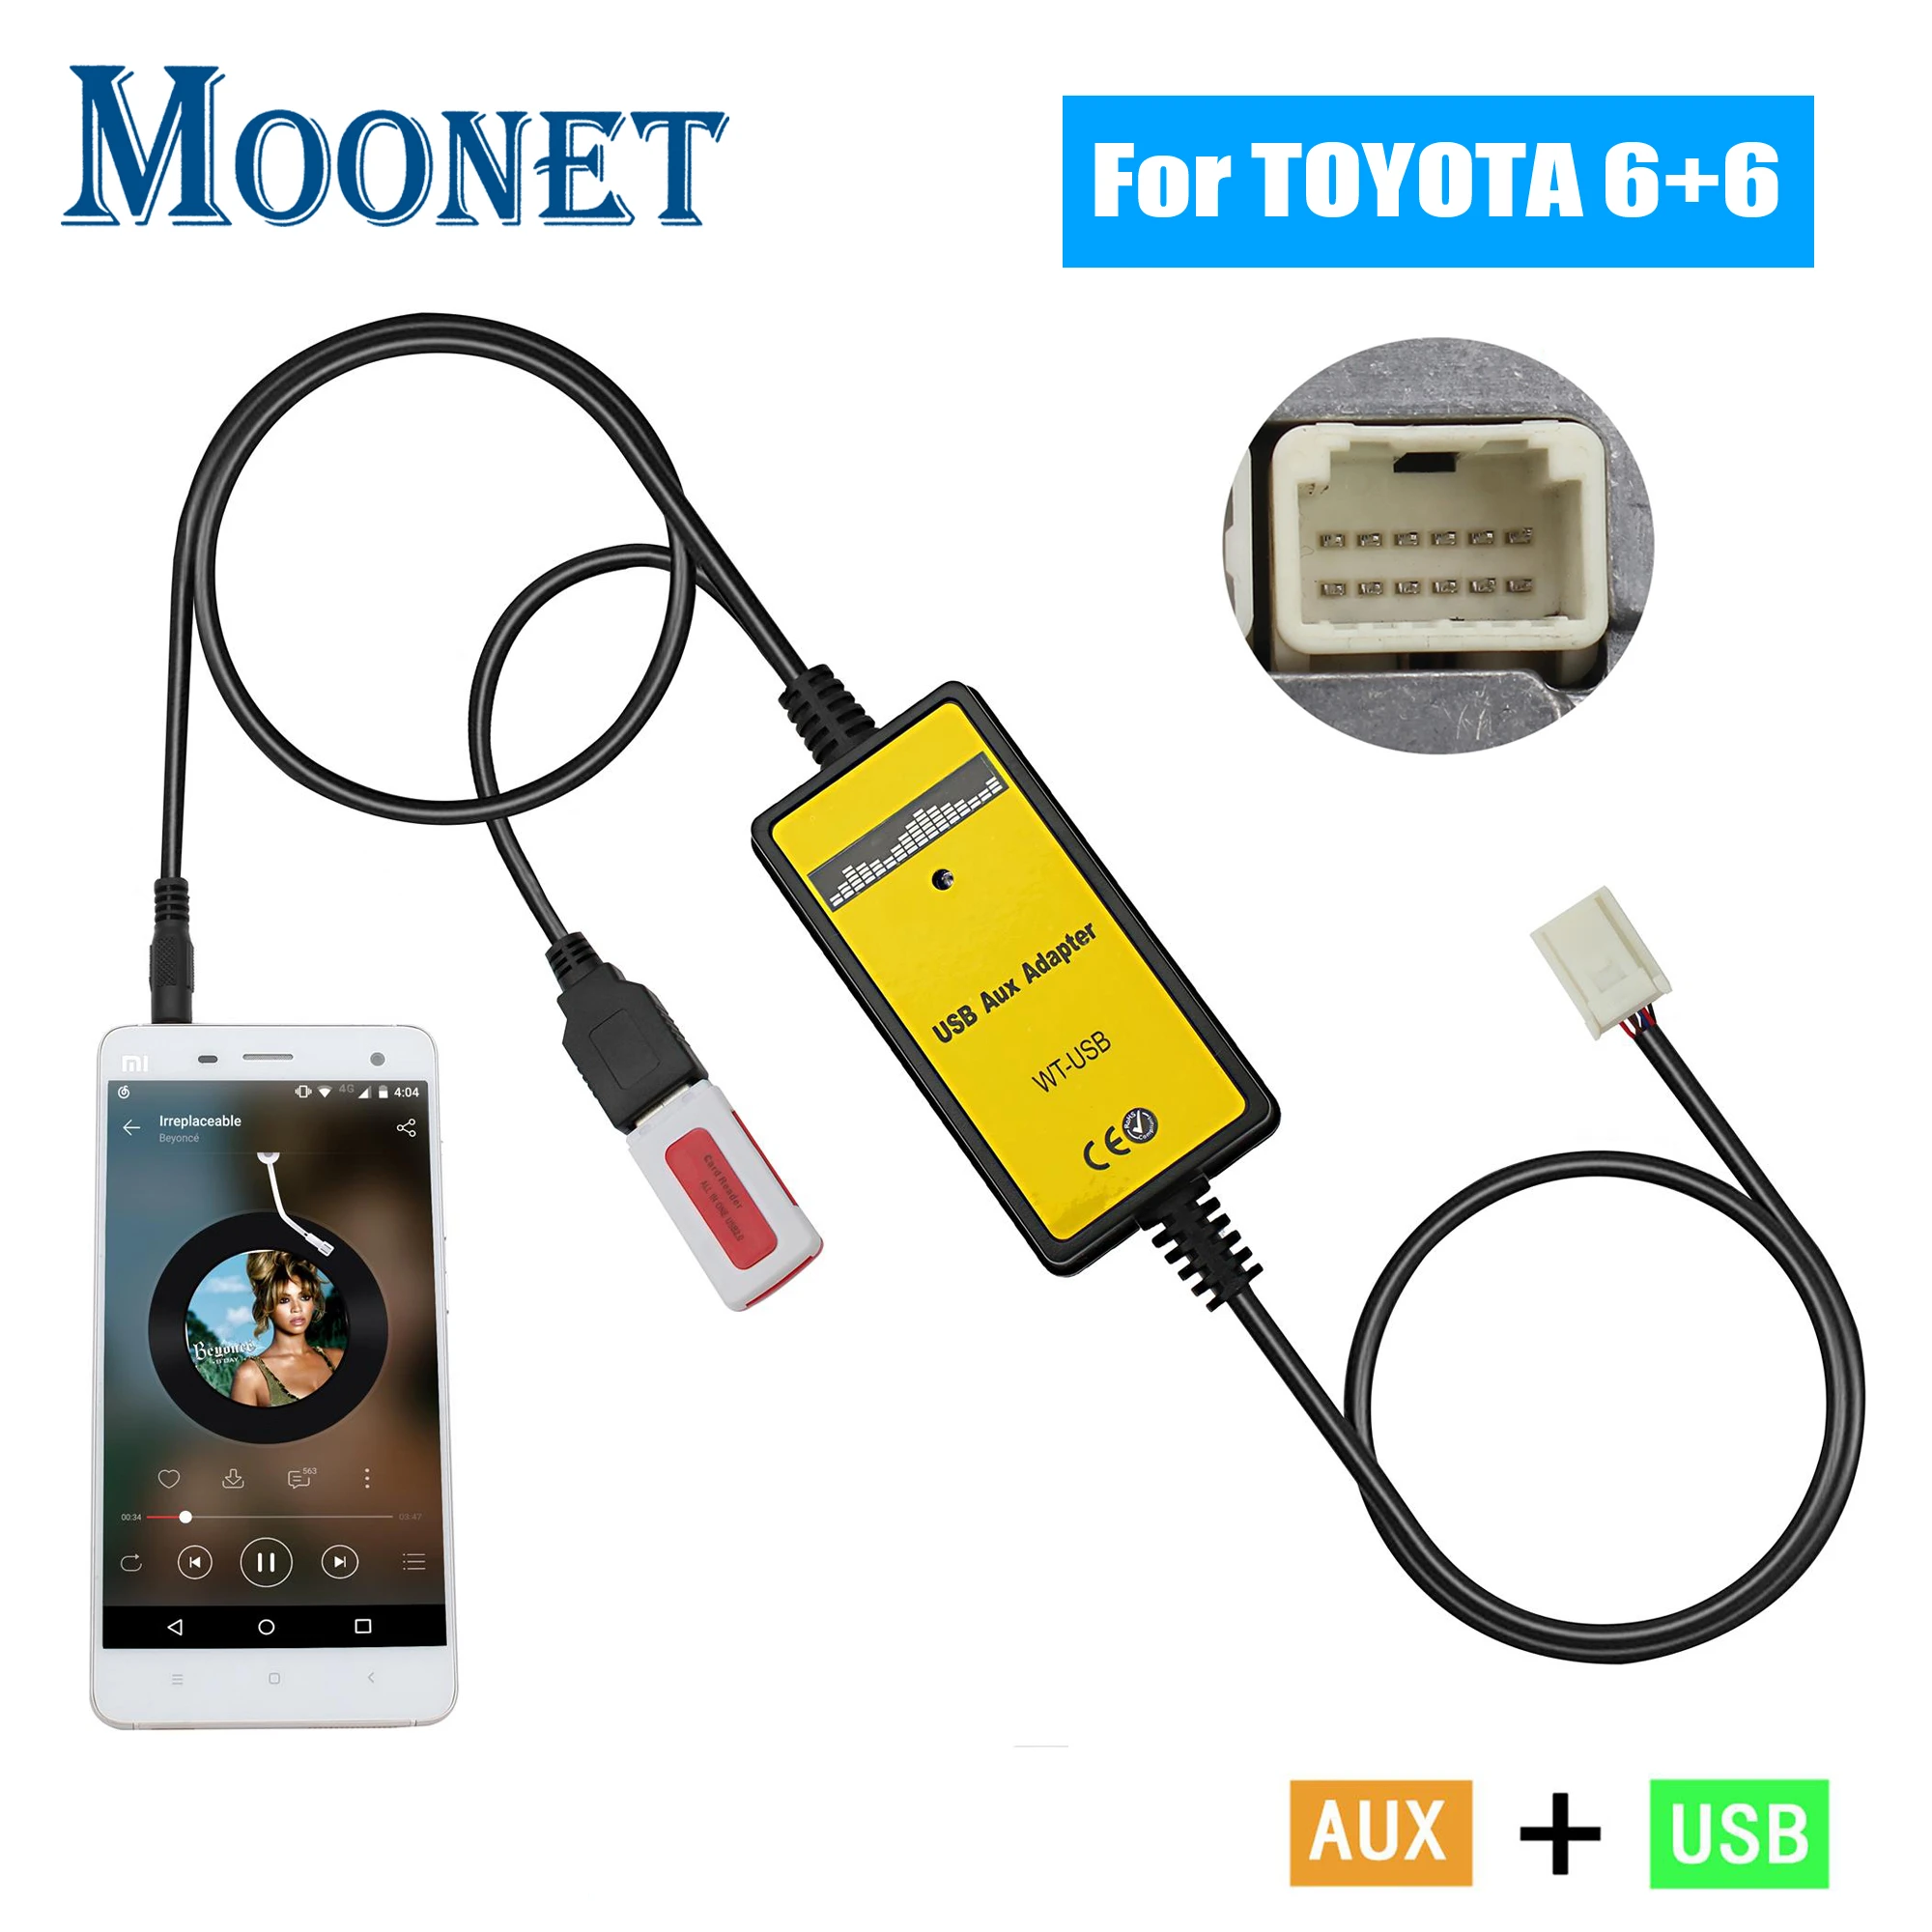 Moonet Adaptador de Audio USB AUX para coche, cambiador de CD estéreo para  Toyota Avensis RAV4 Auris Corolla Yaris Camry (no se ajusta a Navi y  pantalla táctil)|Cables, adaptadores y enchufes| -